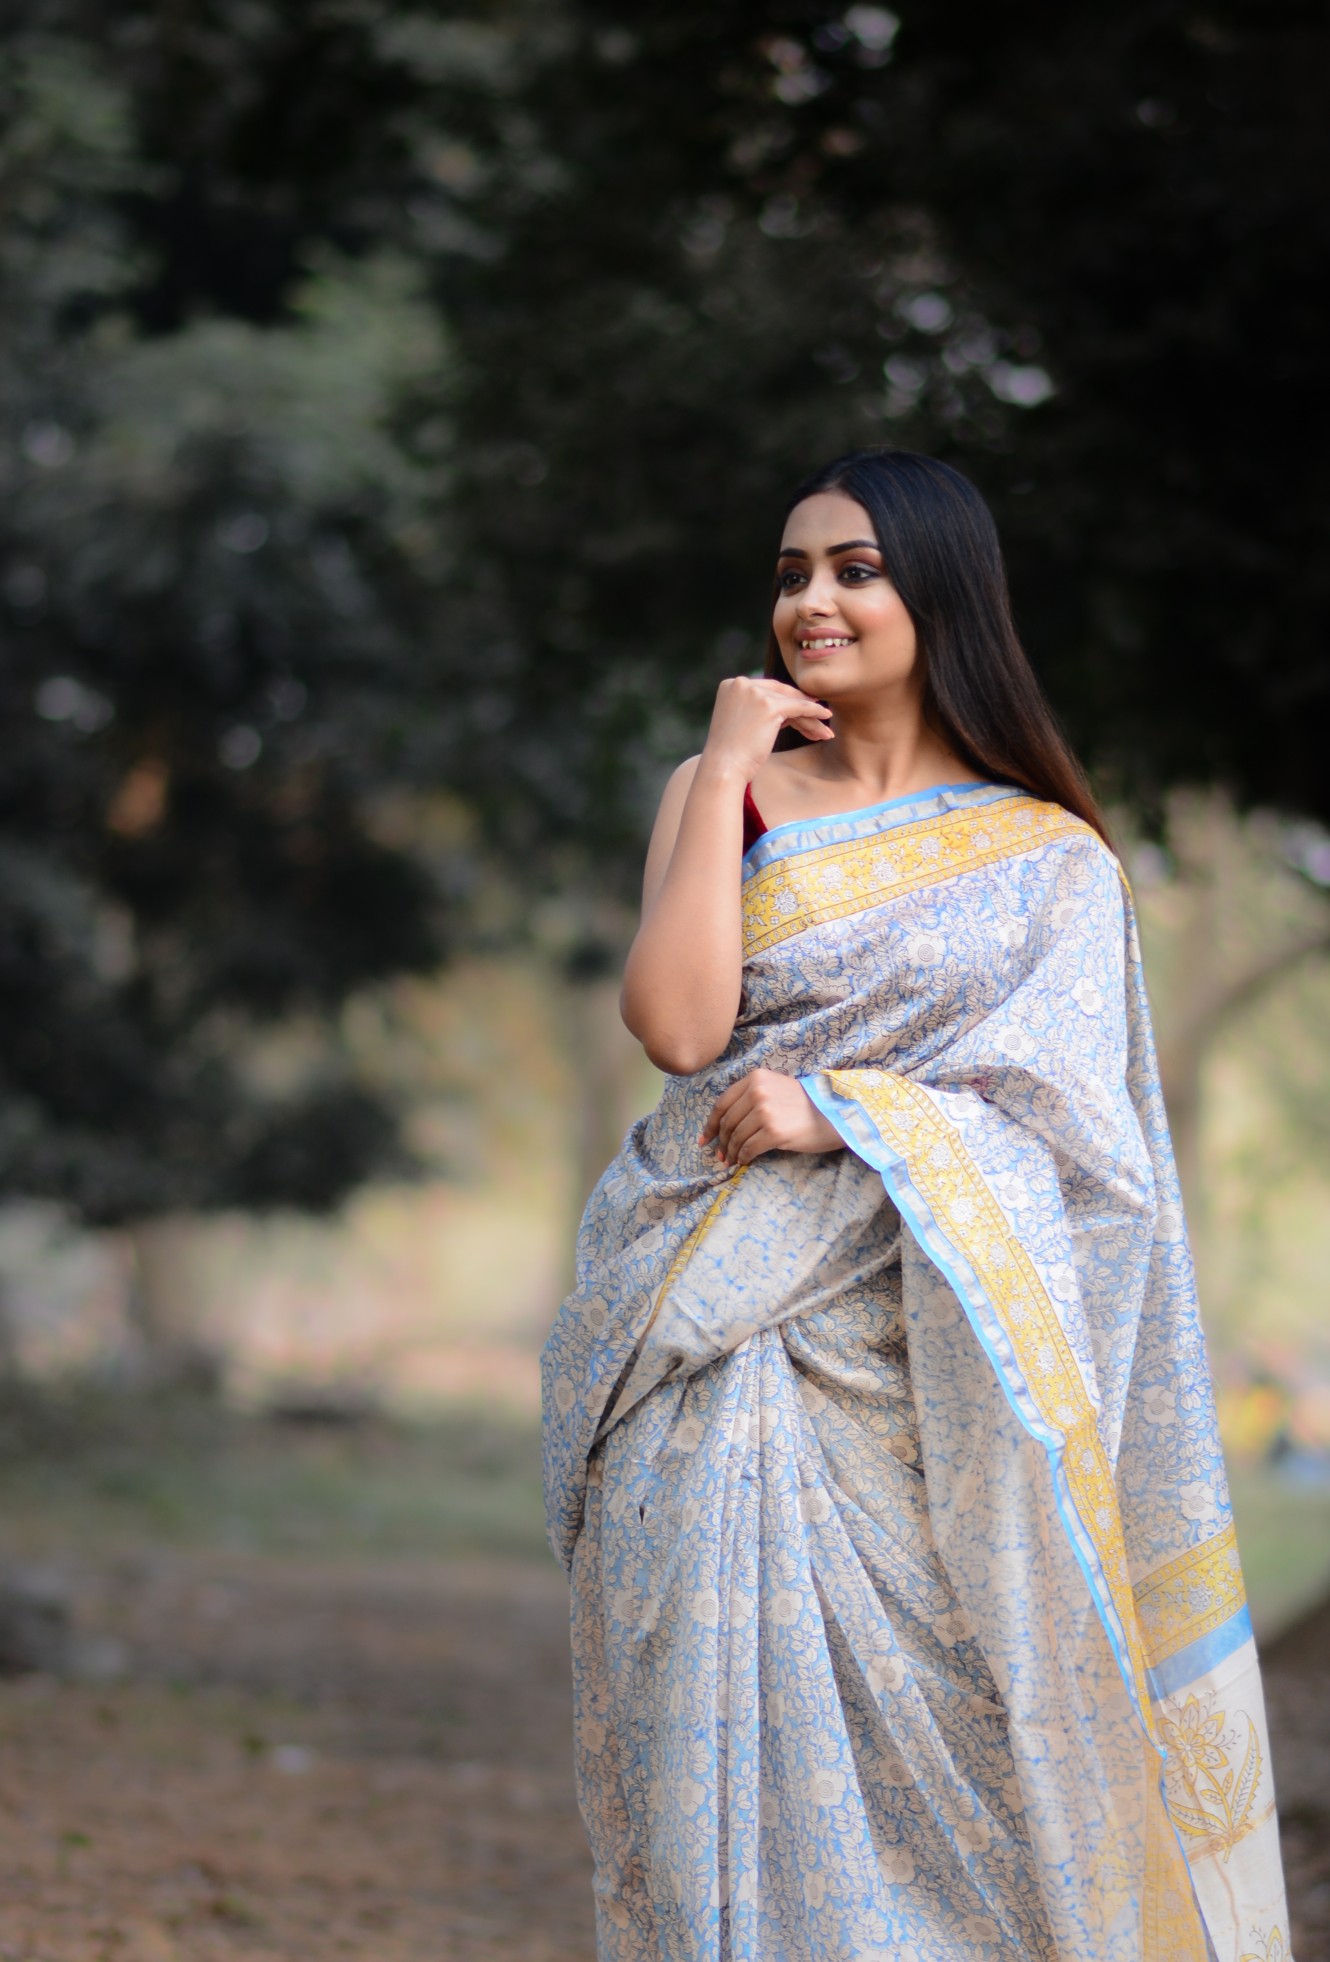 SNEAK PEEK! Fabri | Saree photoshoot, Saree poses, Cotton saree designs